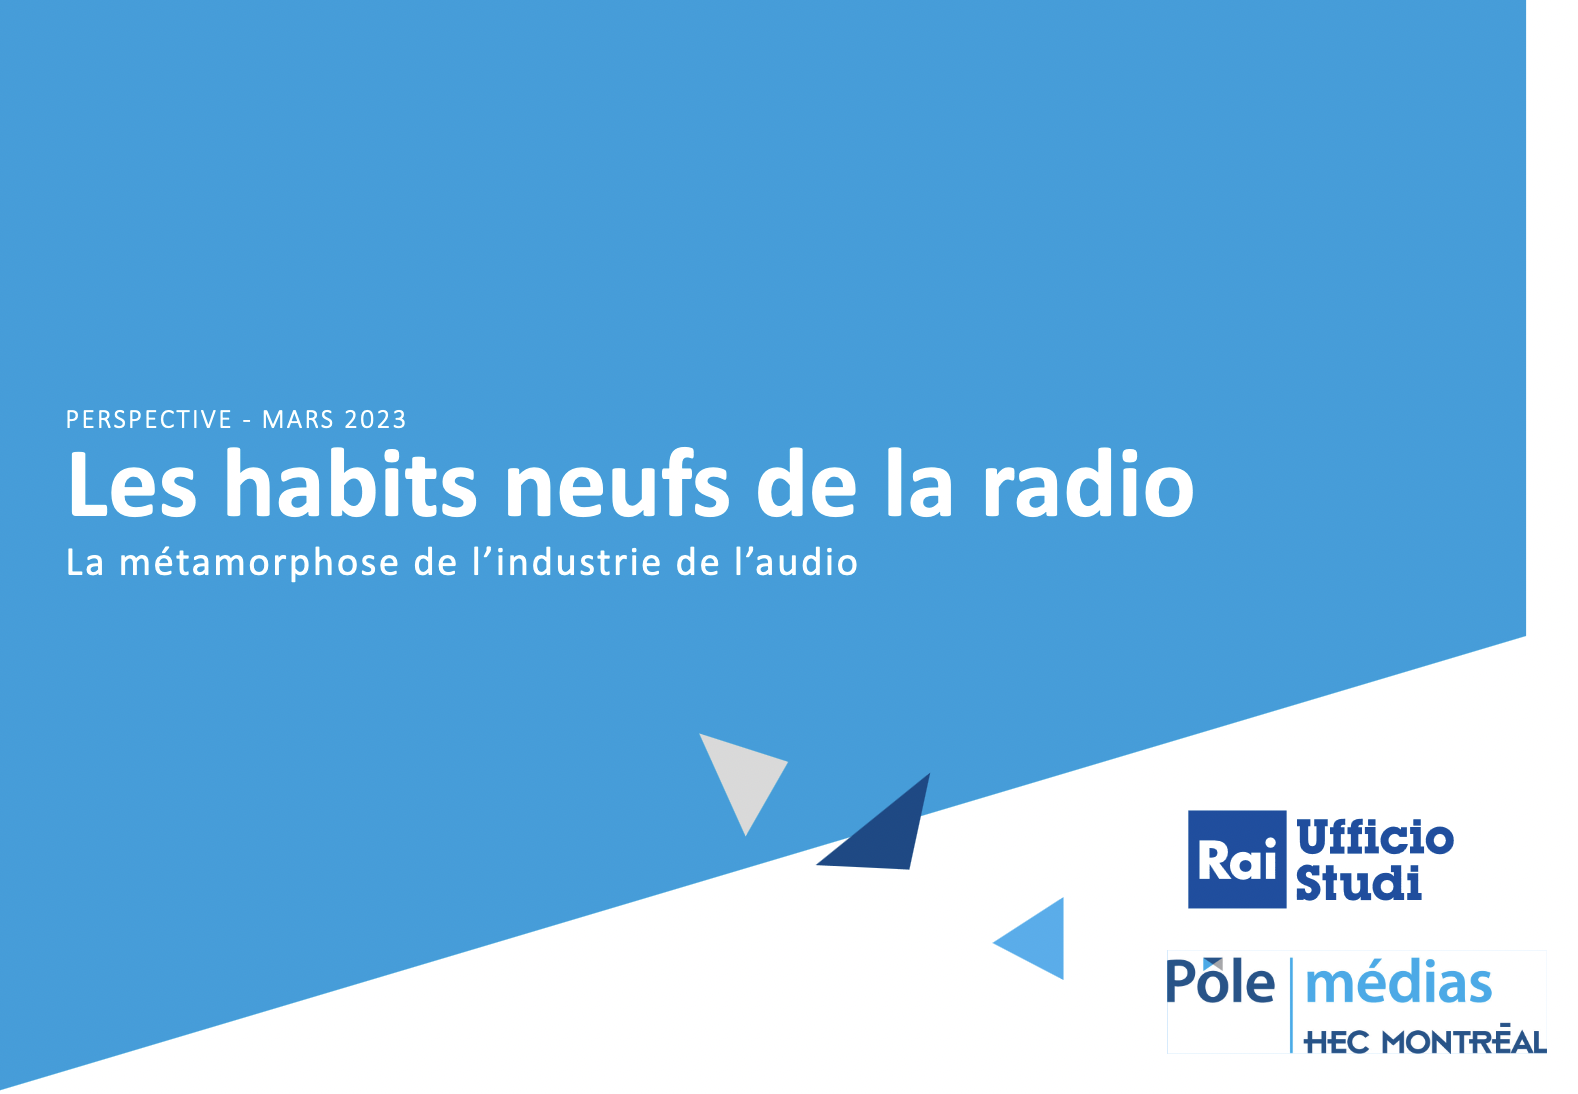 "Les habits neufs de la radio" : une étude sur la métamorphose de la radio